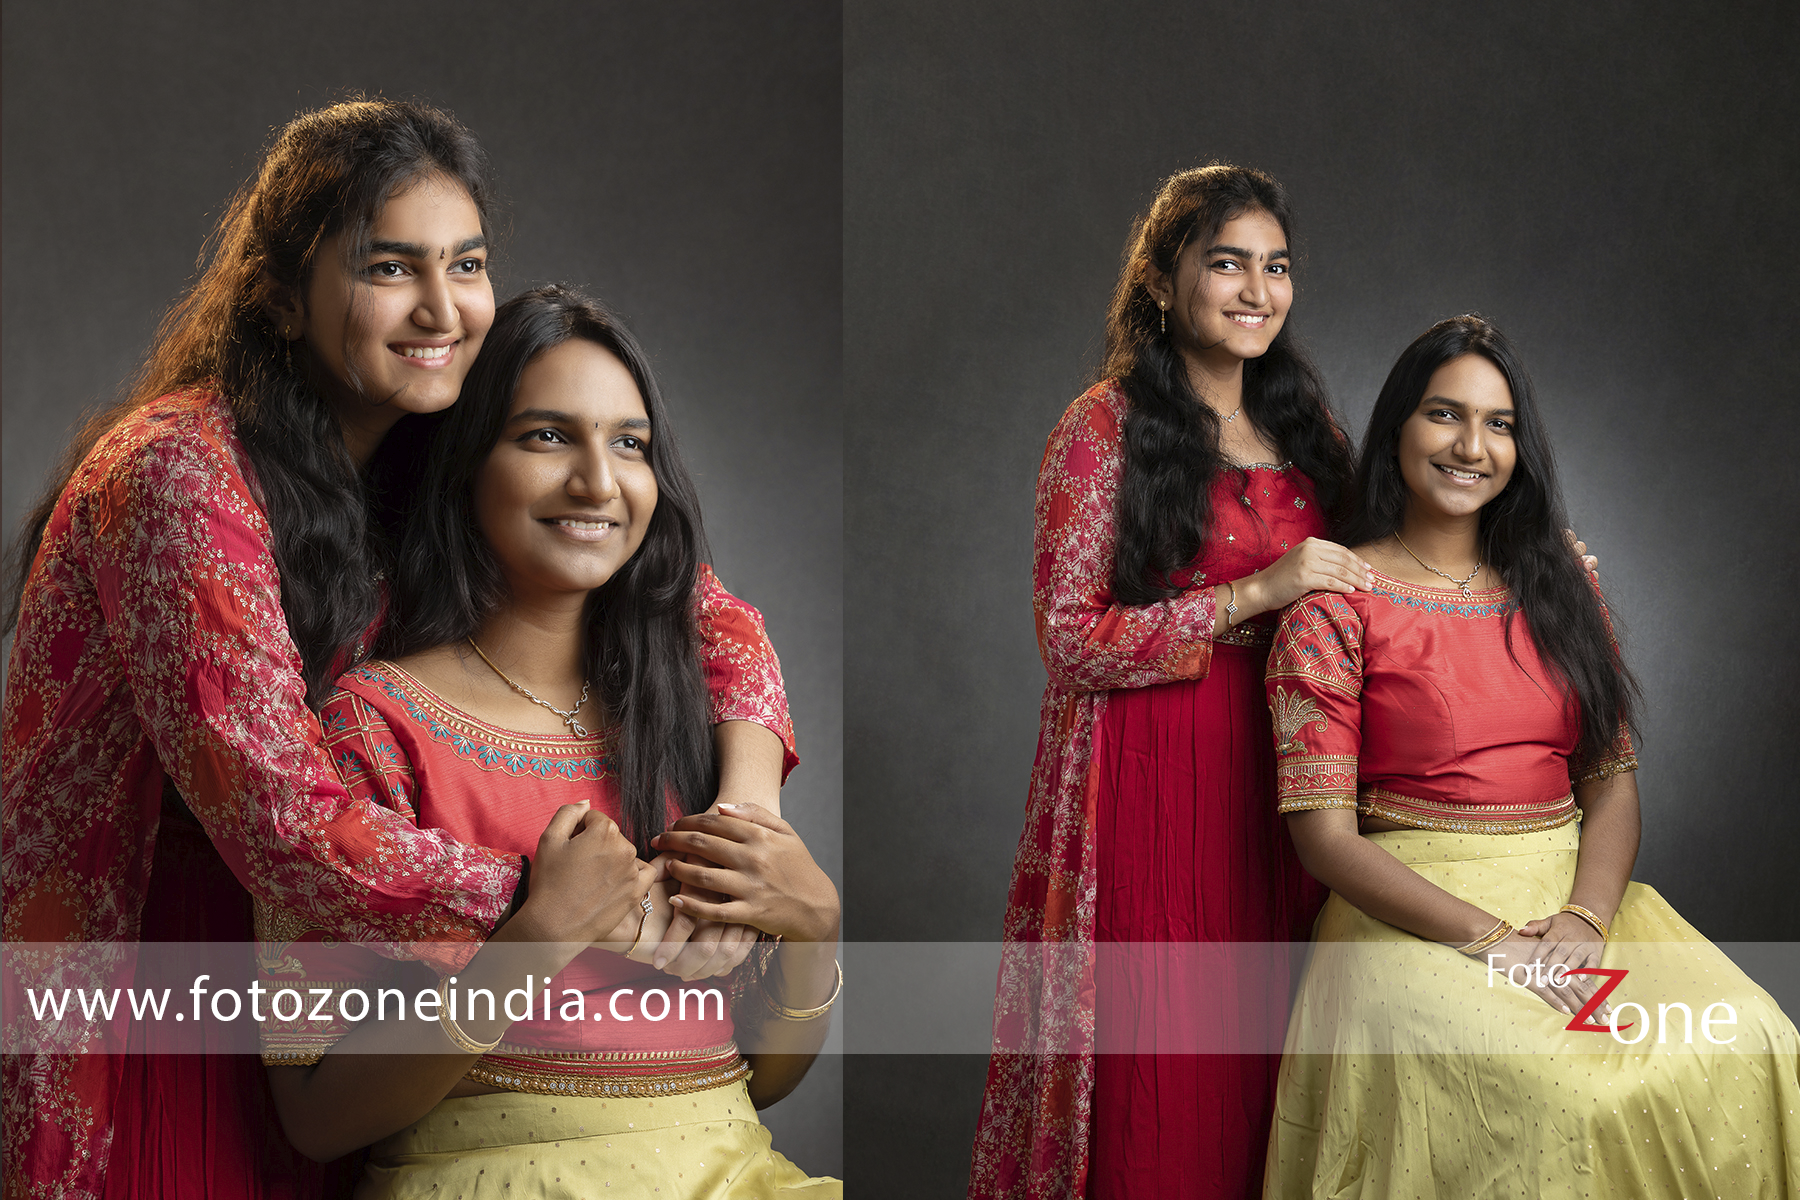 Photo: Portraits | Indian wedding photography poses, Wedding couple poses  photography, Indian wedding photography couples